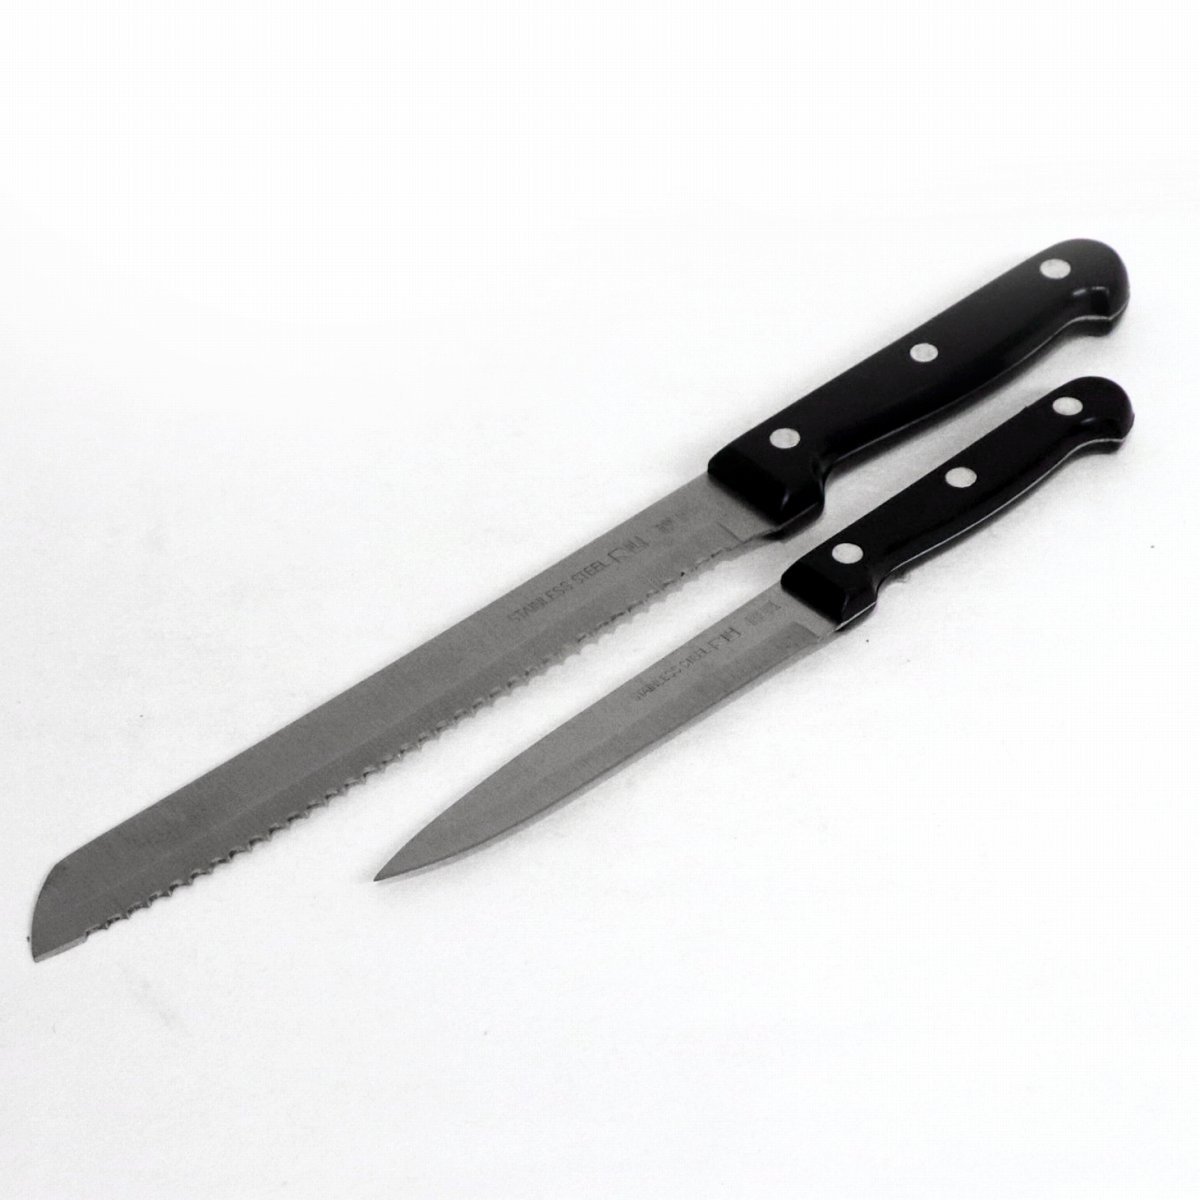  sword Takumi *. maple * bread cutting knife * petit knife * kitchen knife stainless steel *2 pcs set *No.200426-20* packing size 60